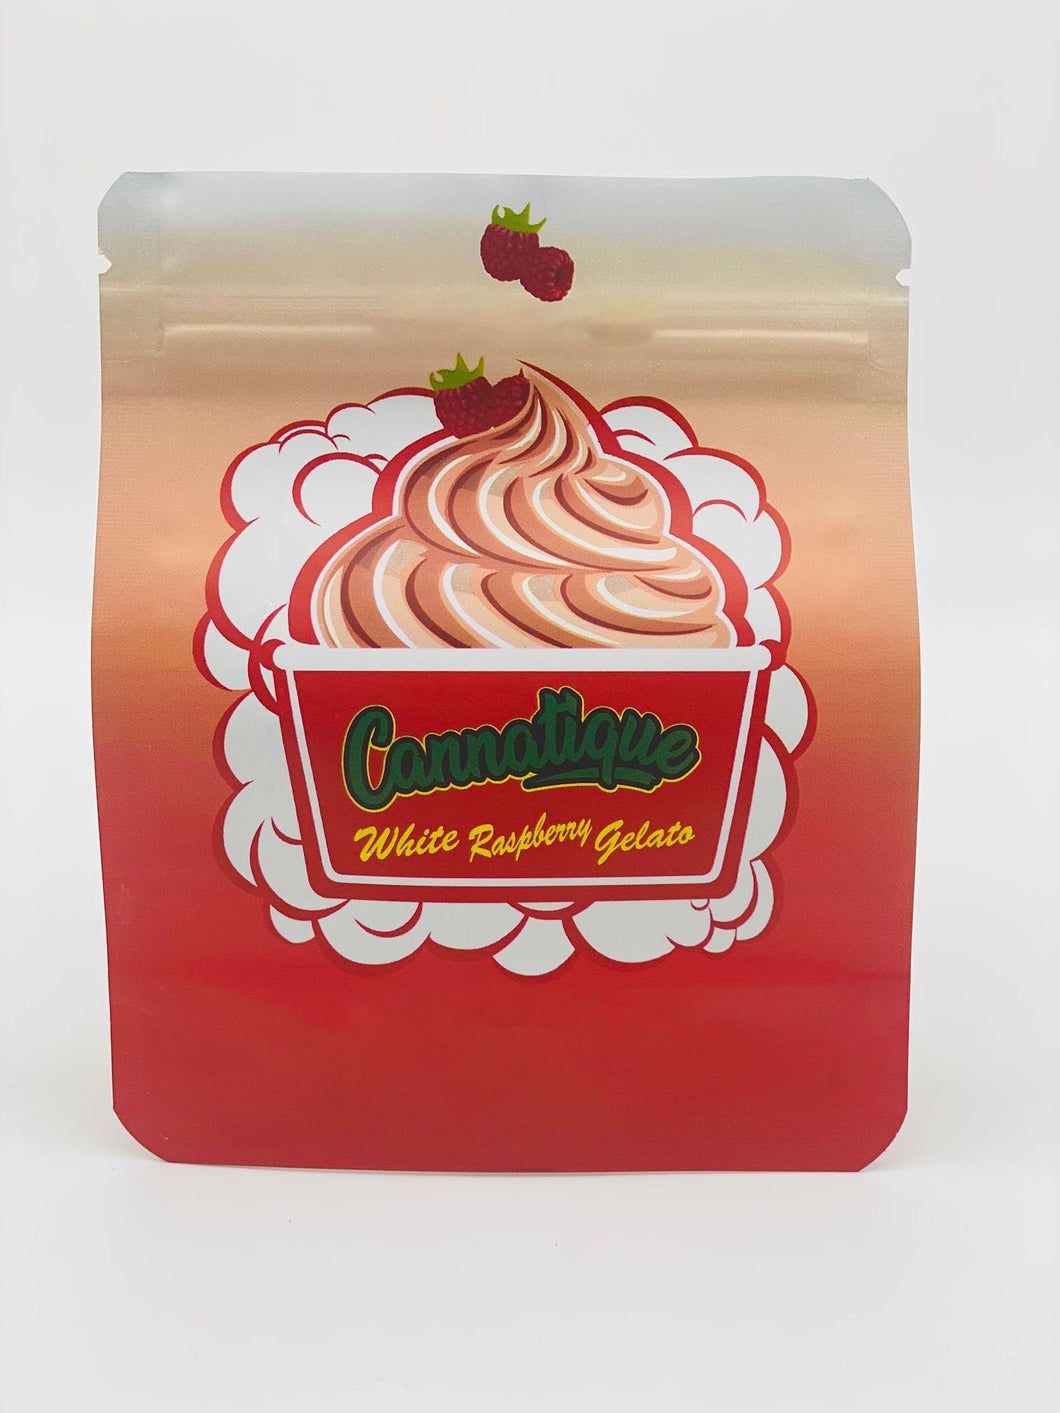 50 Cannatique White Raspberry Gelato 3.5-gram empty Cut Mylar bags